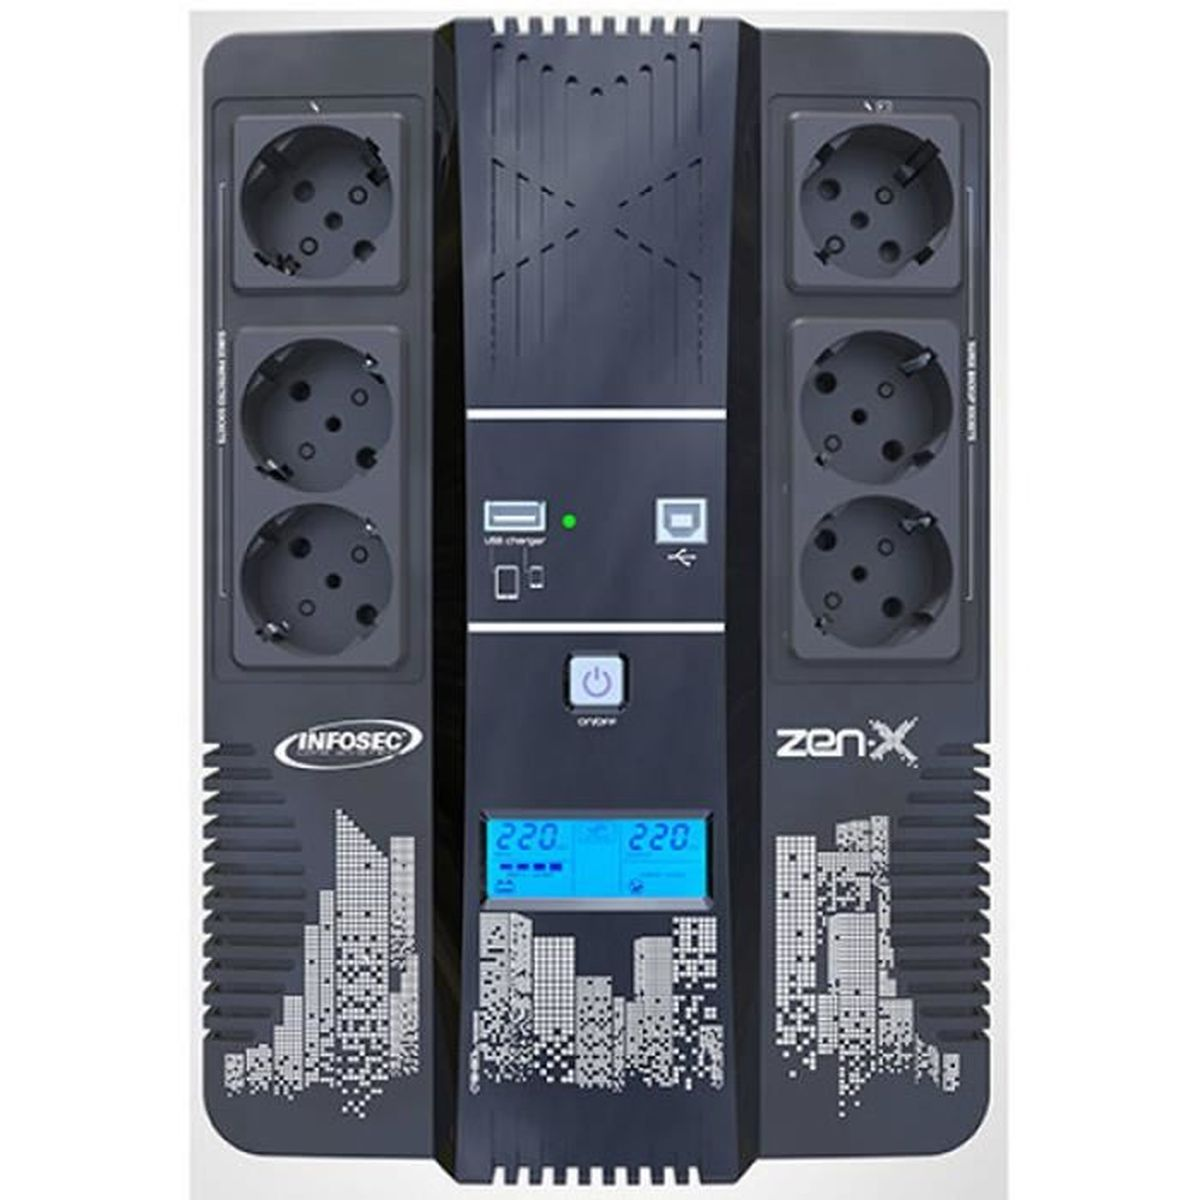 Zen-X 800 INFOSEC Wechselrichter FR/SCHUKO,